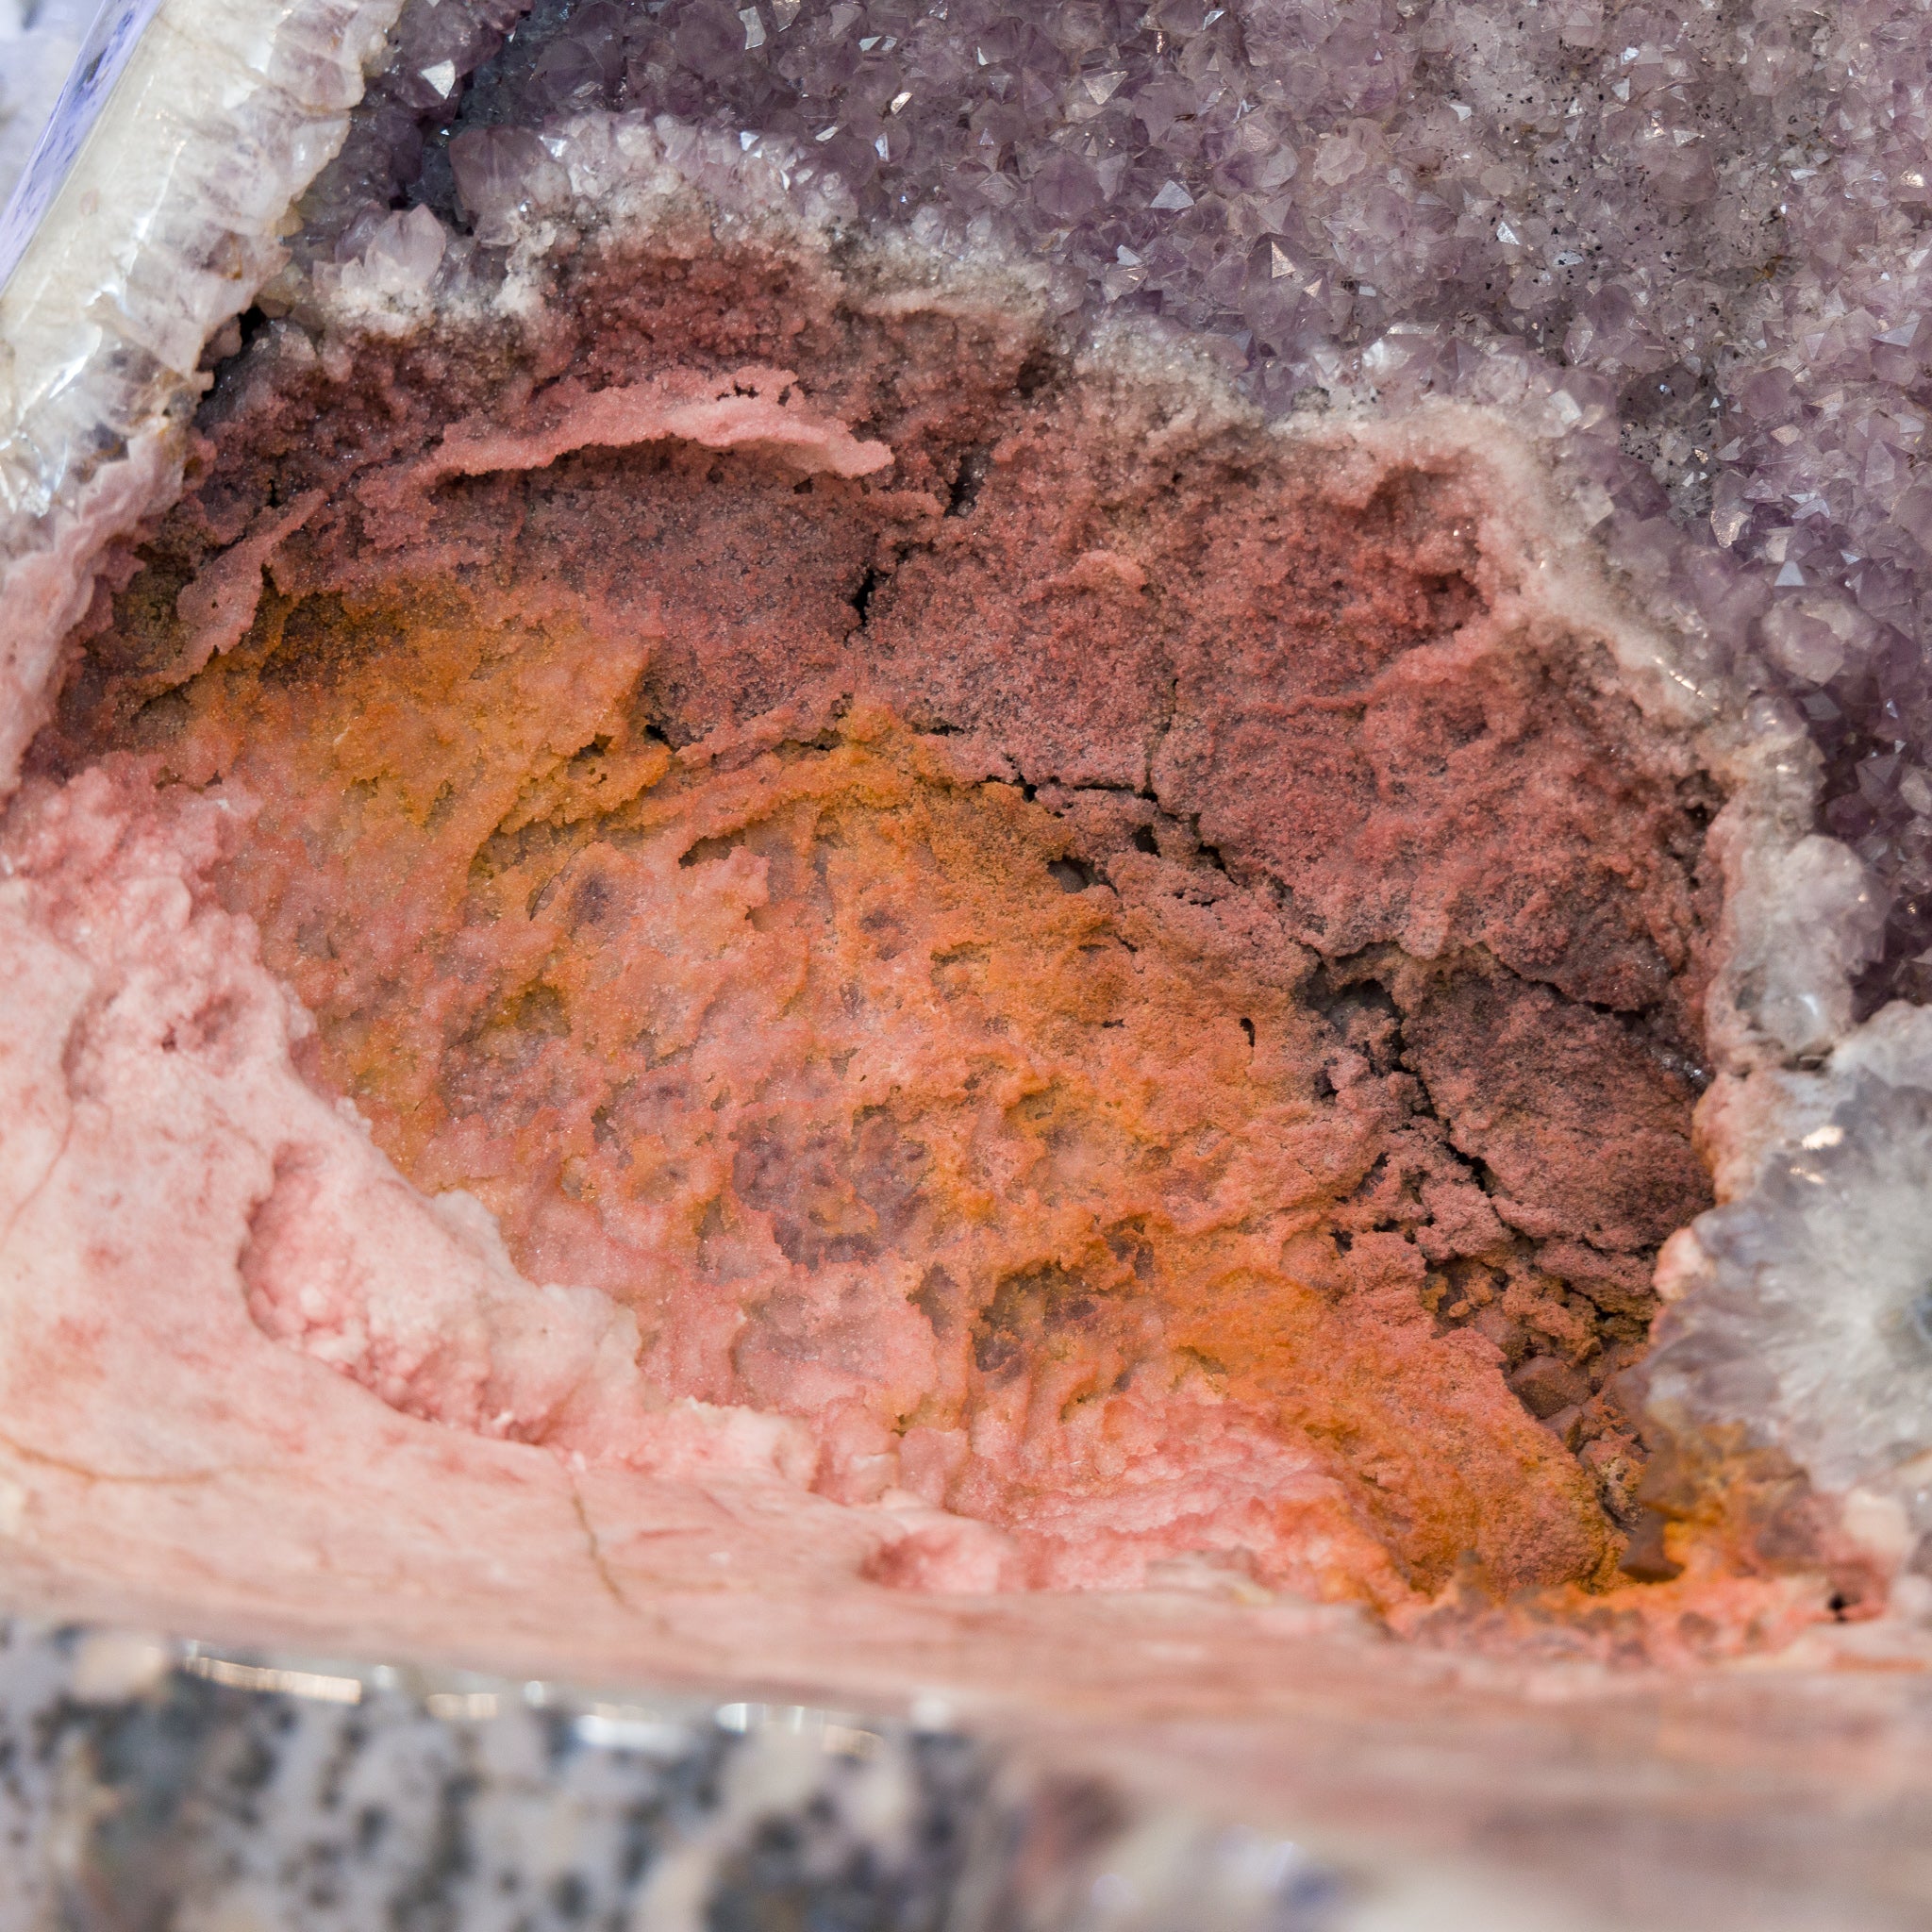 Amethyst Geode 7ft 1109kg Throne with Pink Amethyst & Jasper - Brazil - JJX-385 - Crystalarium